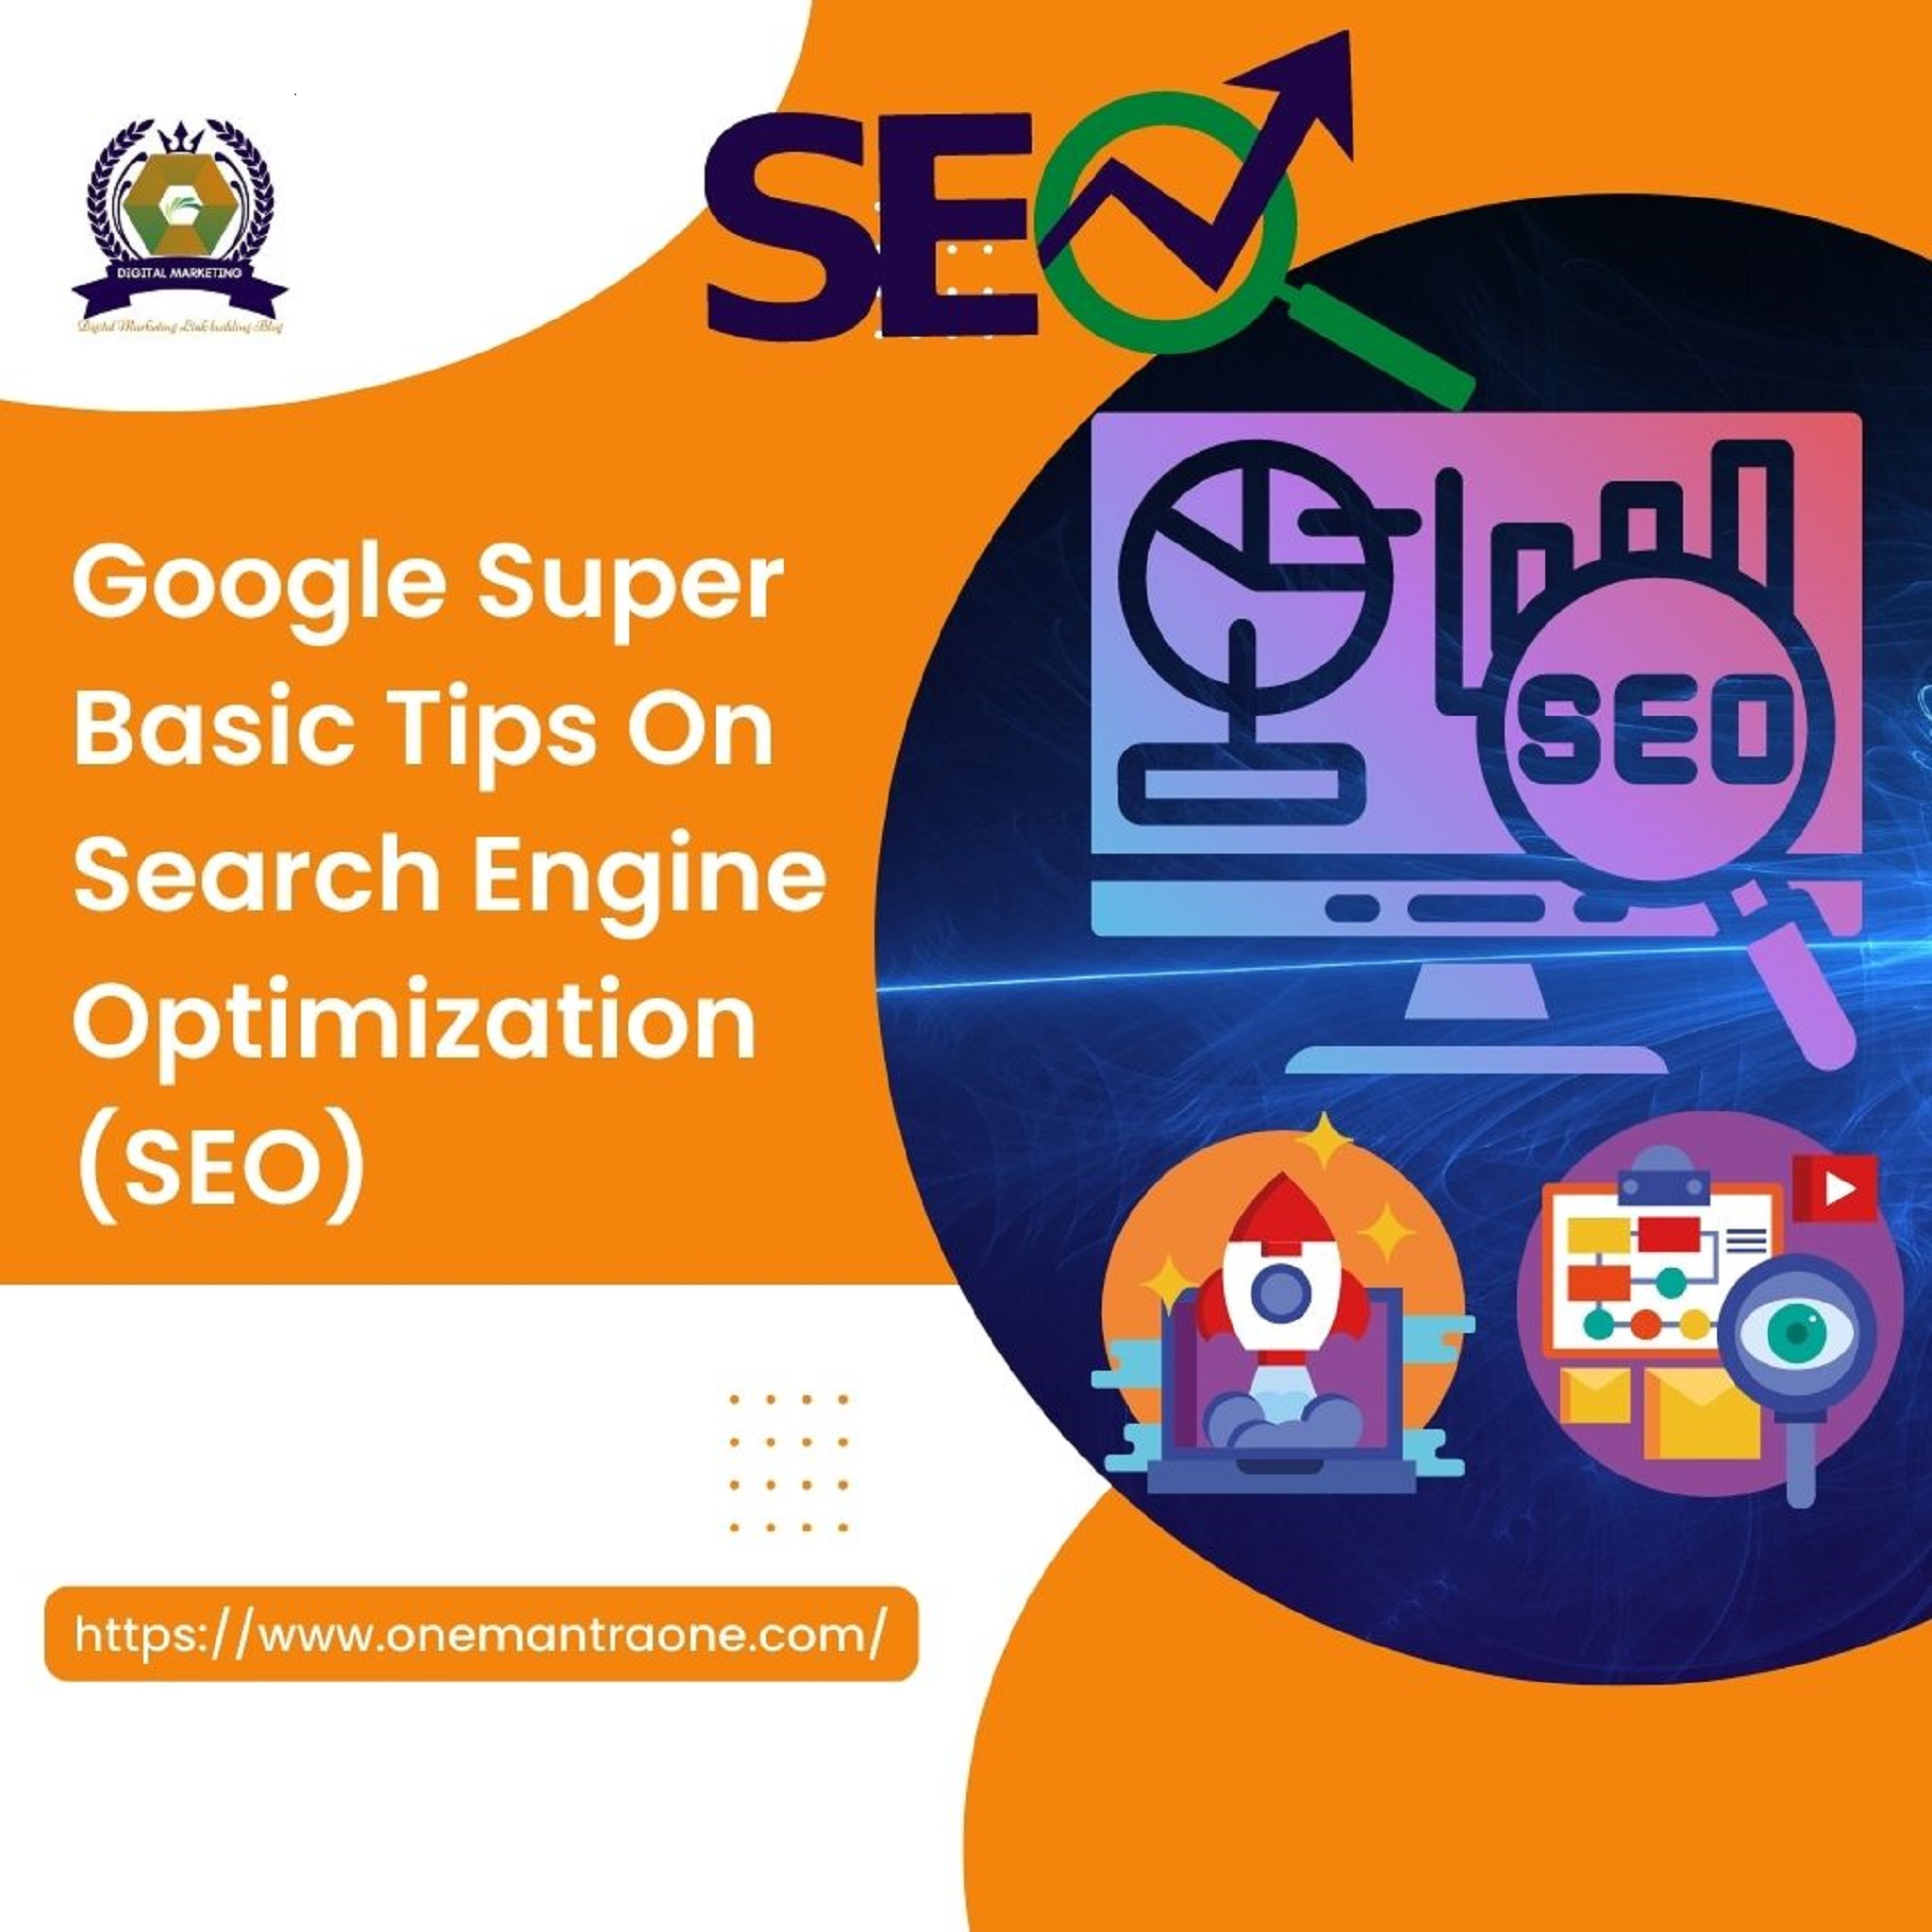 Google Super Basic Tips On Search Engine Optimization (SEO)